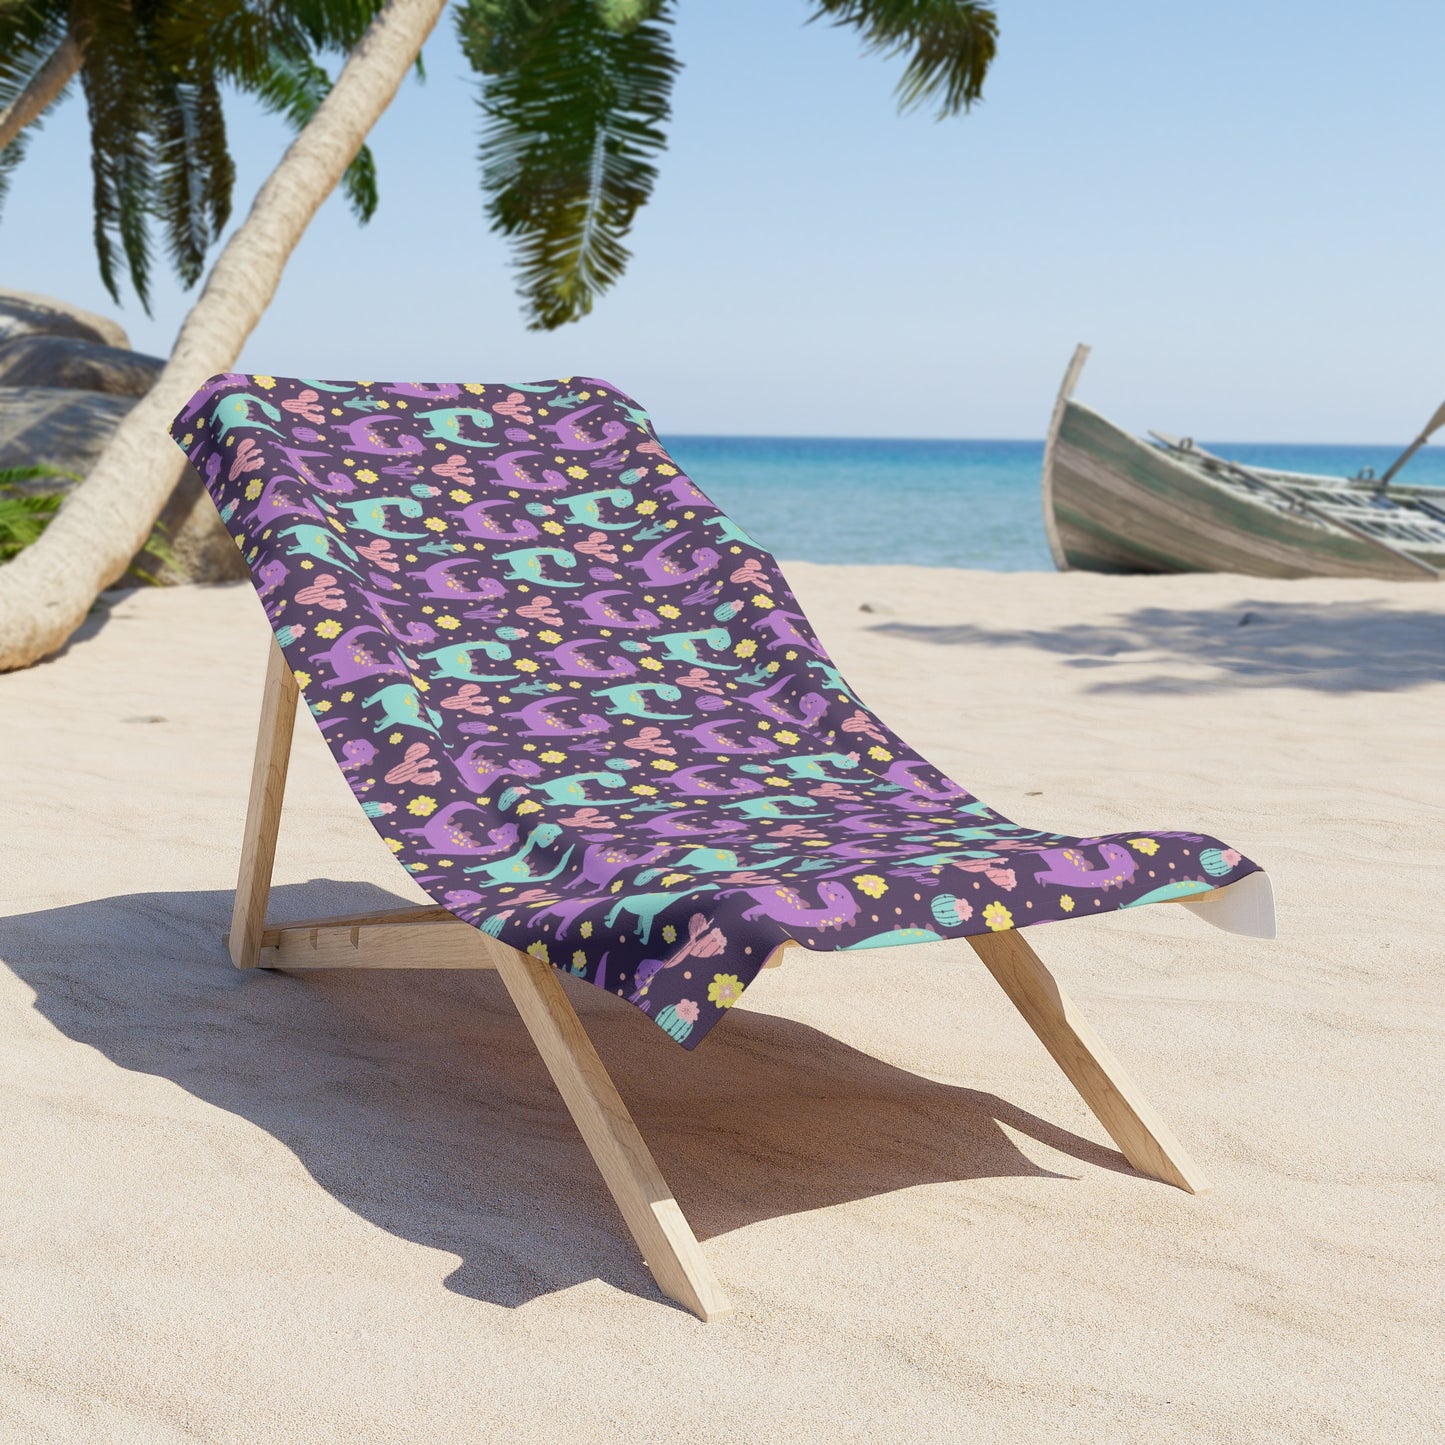 Niccie Dinosaur Beach Towel - Adorable Dino Pattern for the Sun